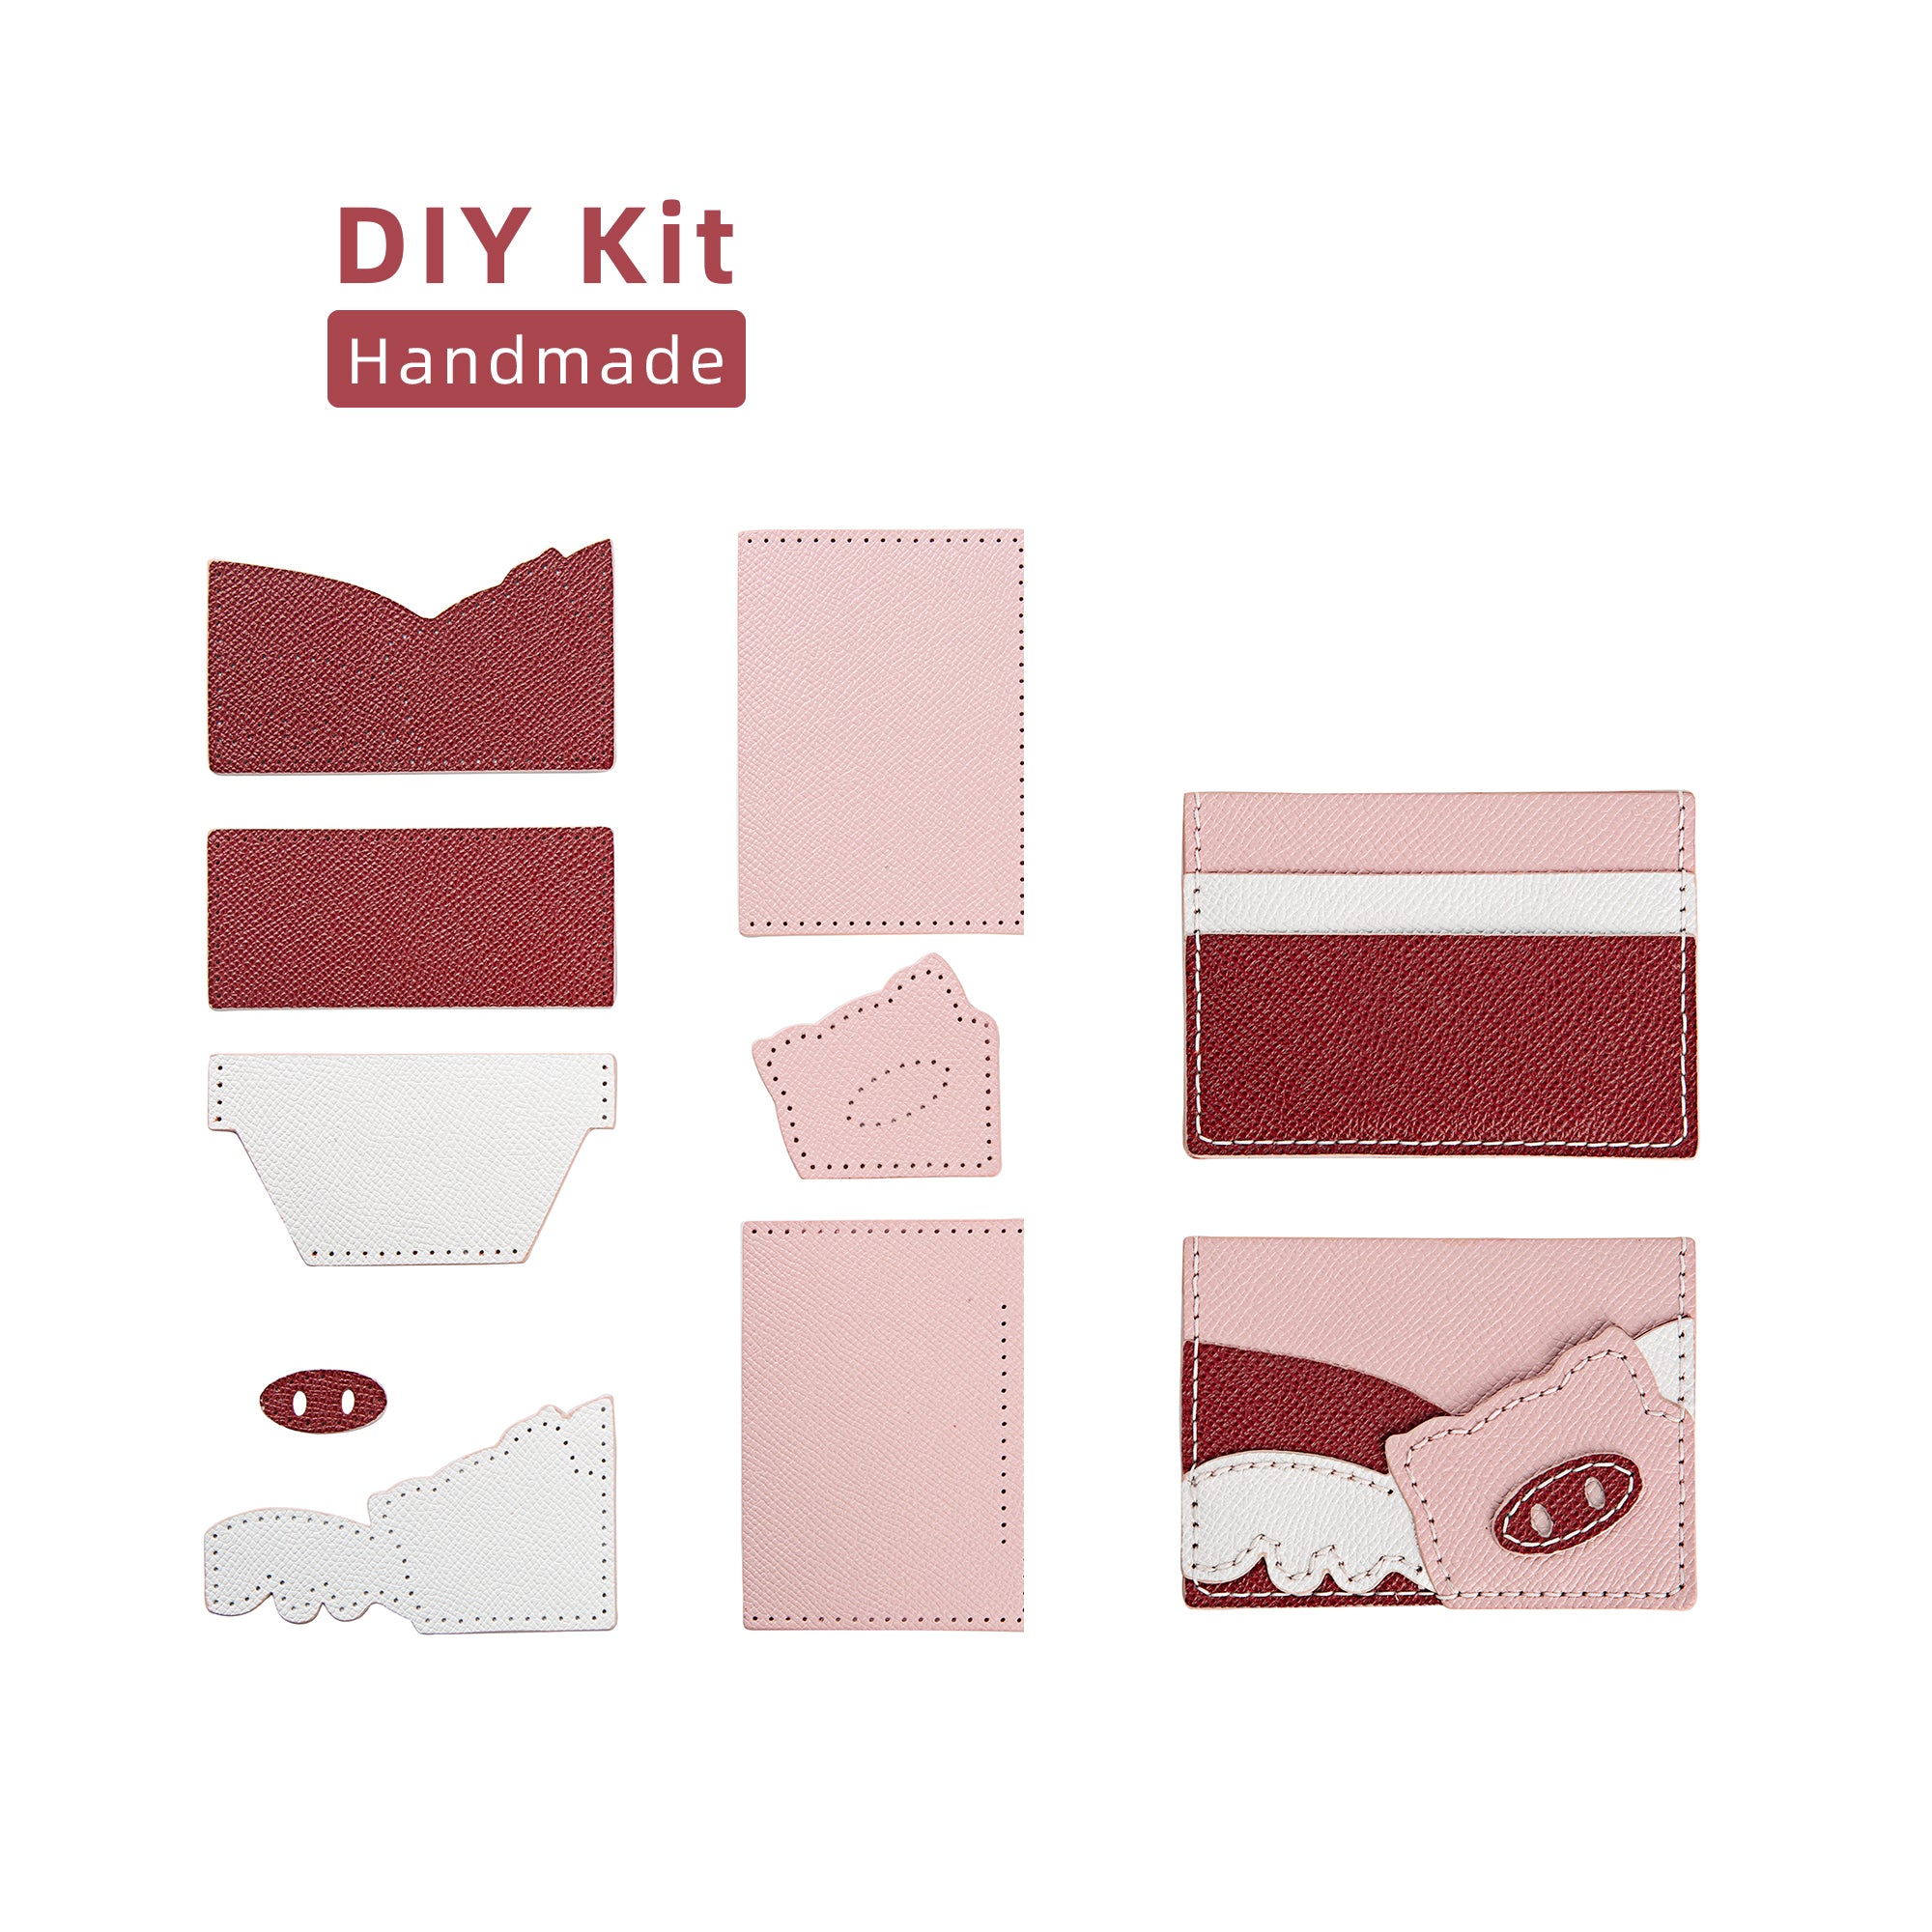 DIY Bag Kits-Flying Pig Card Pack